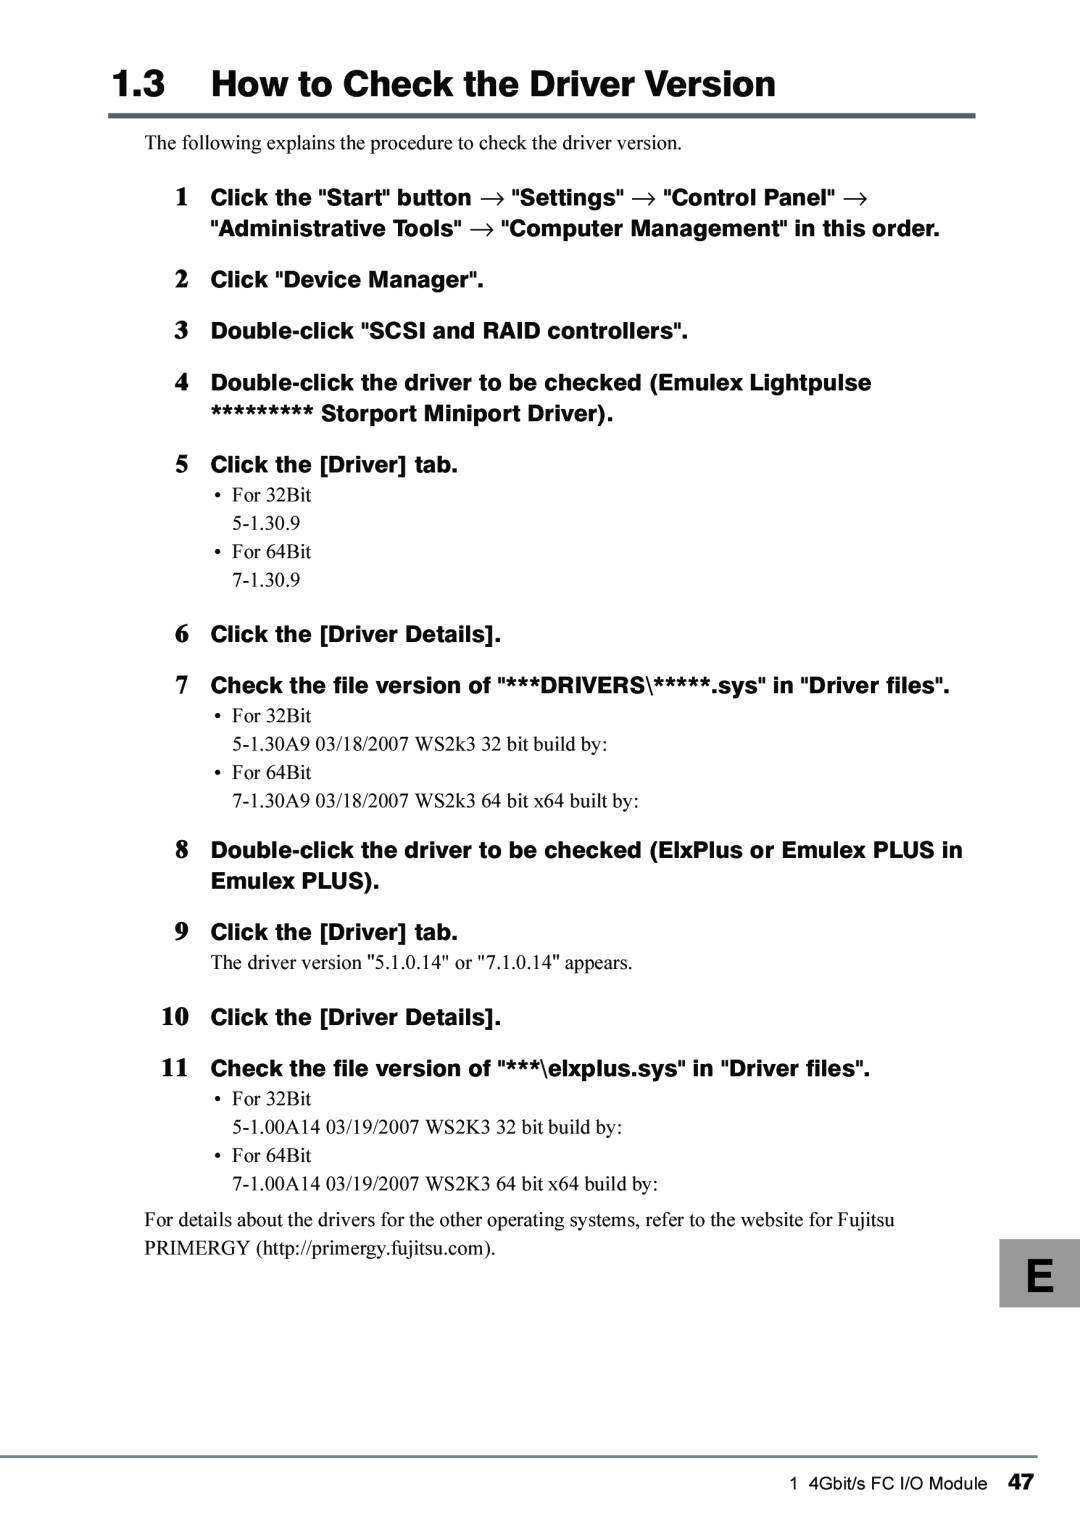 Fujitsu 4Gbit/s FC I/O Modules manual How to Check the Driver Version 